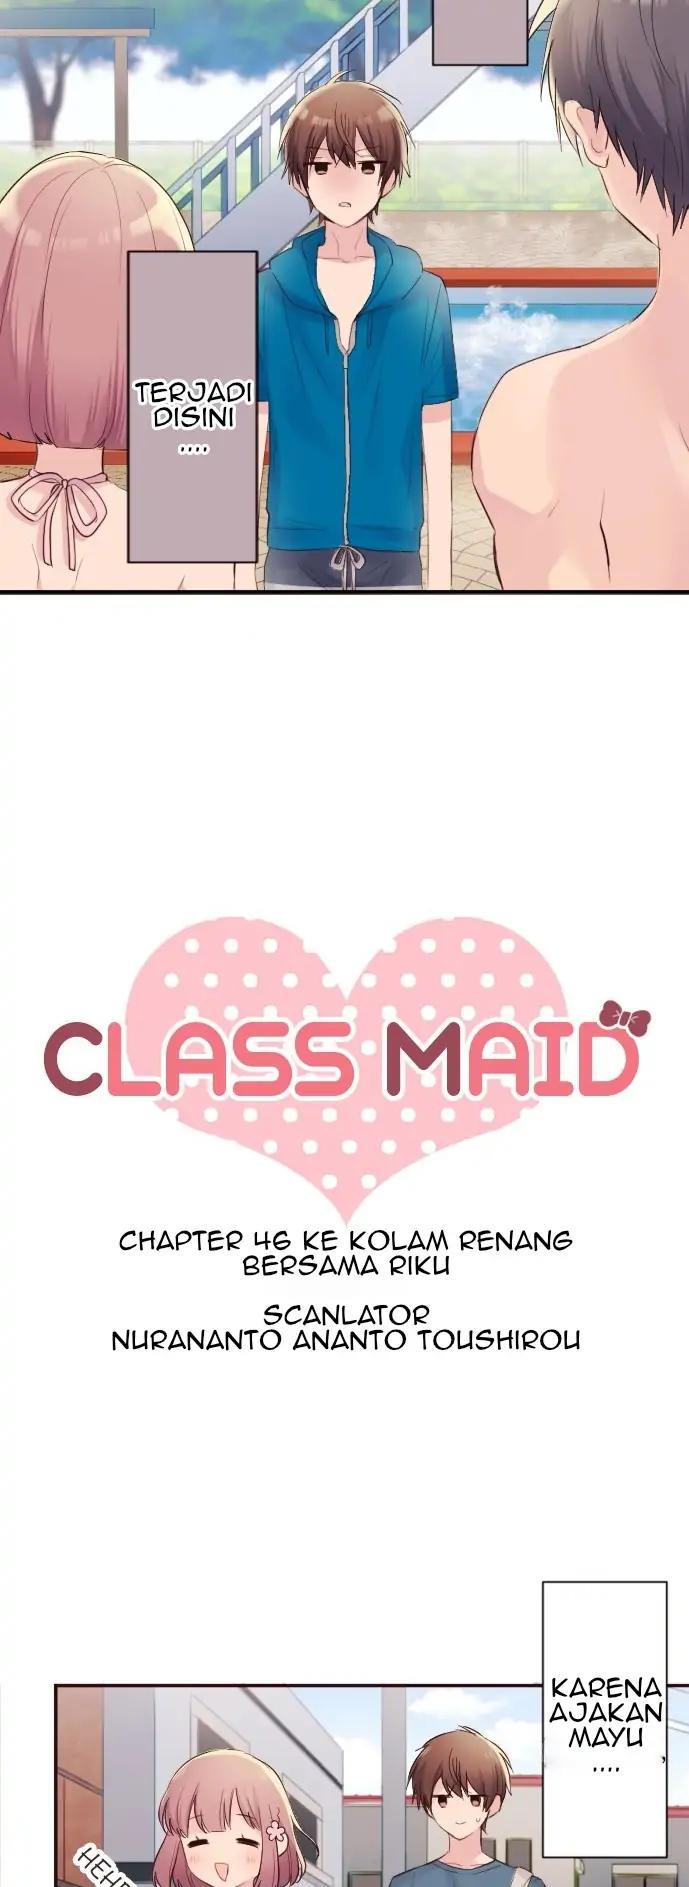 Class Maid (Shimamura) Chapter 46